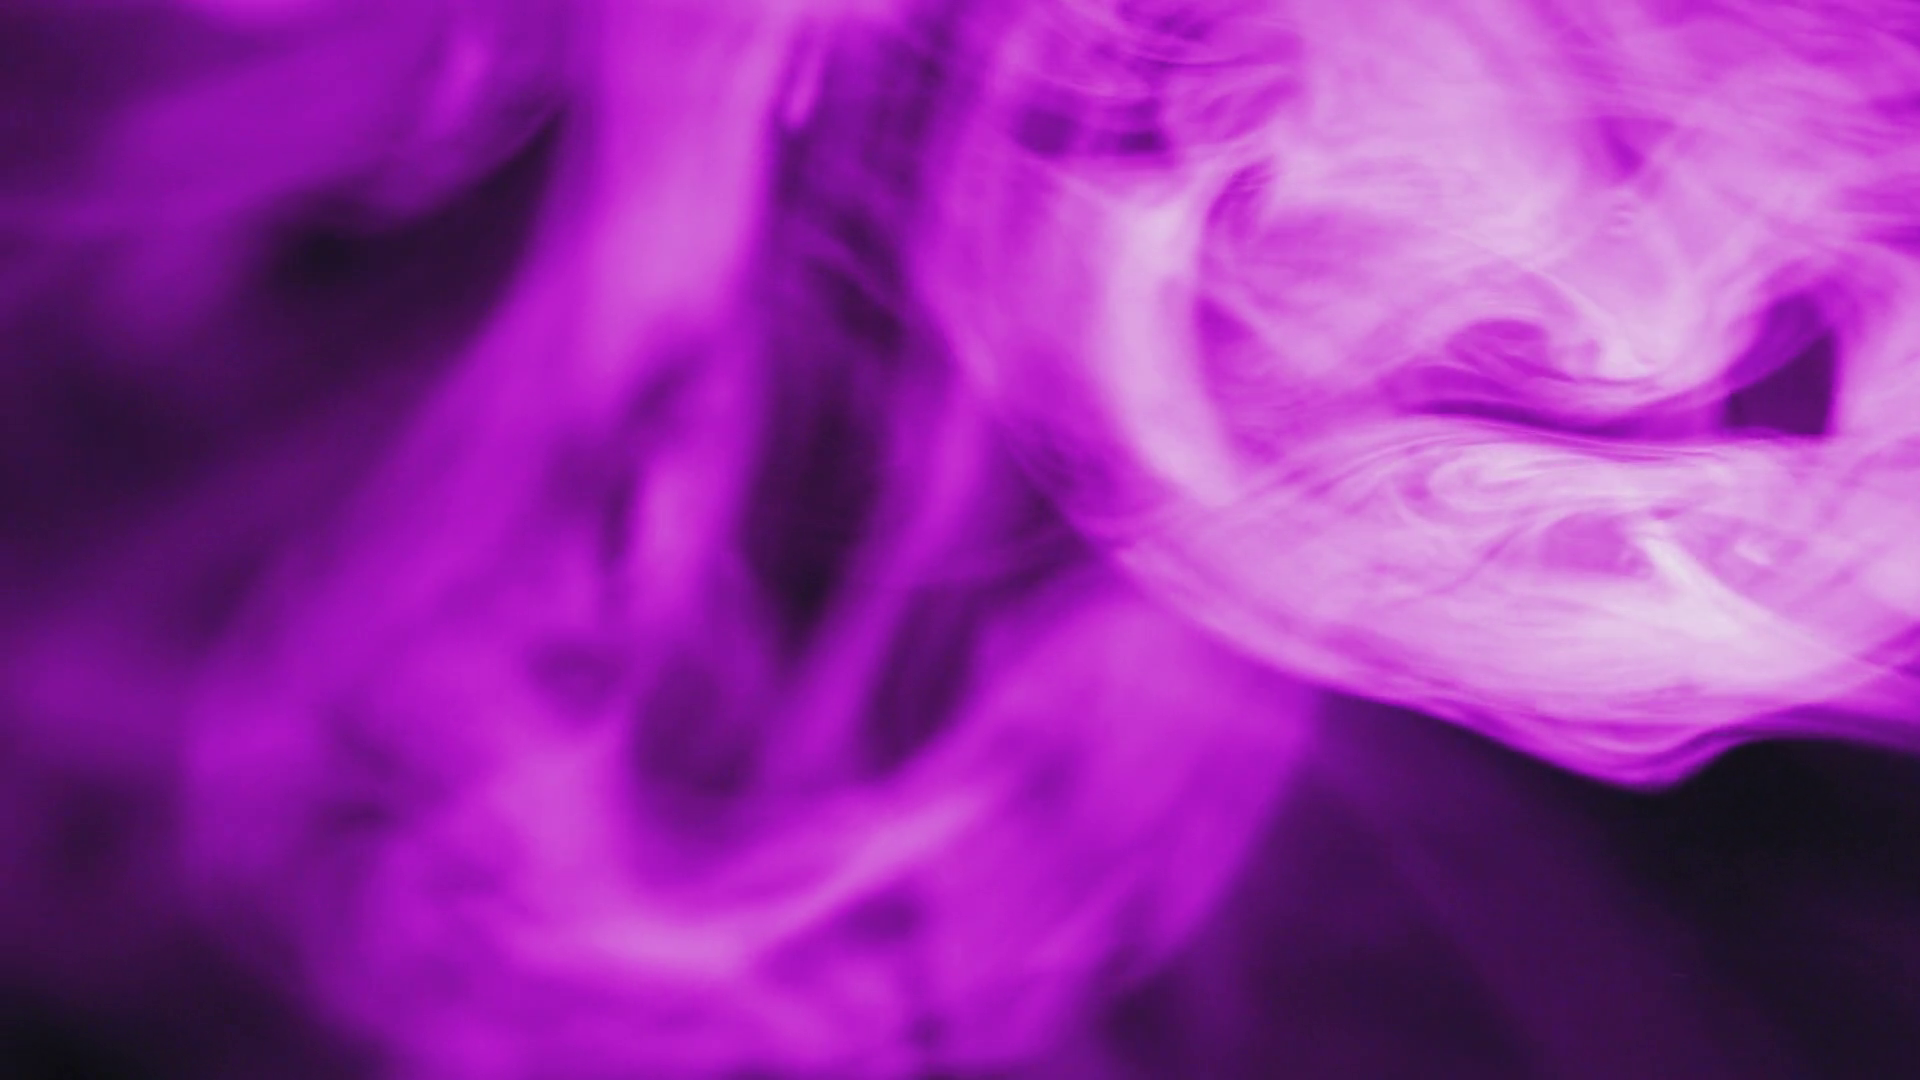 Free Photo Purple Smoke Background Abstract Black Isolated Free